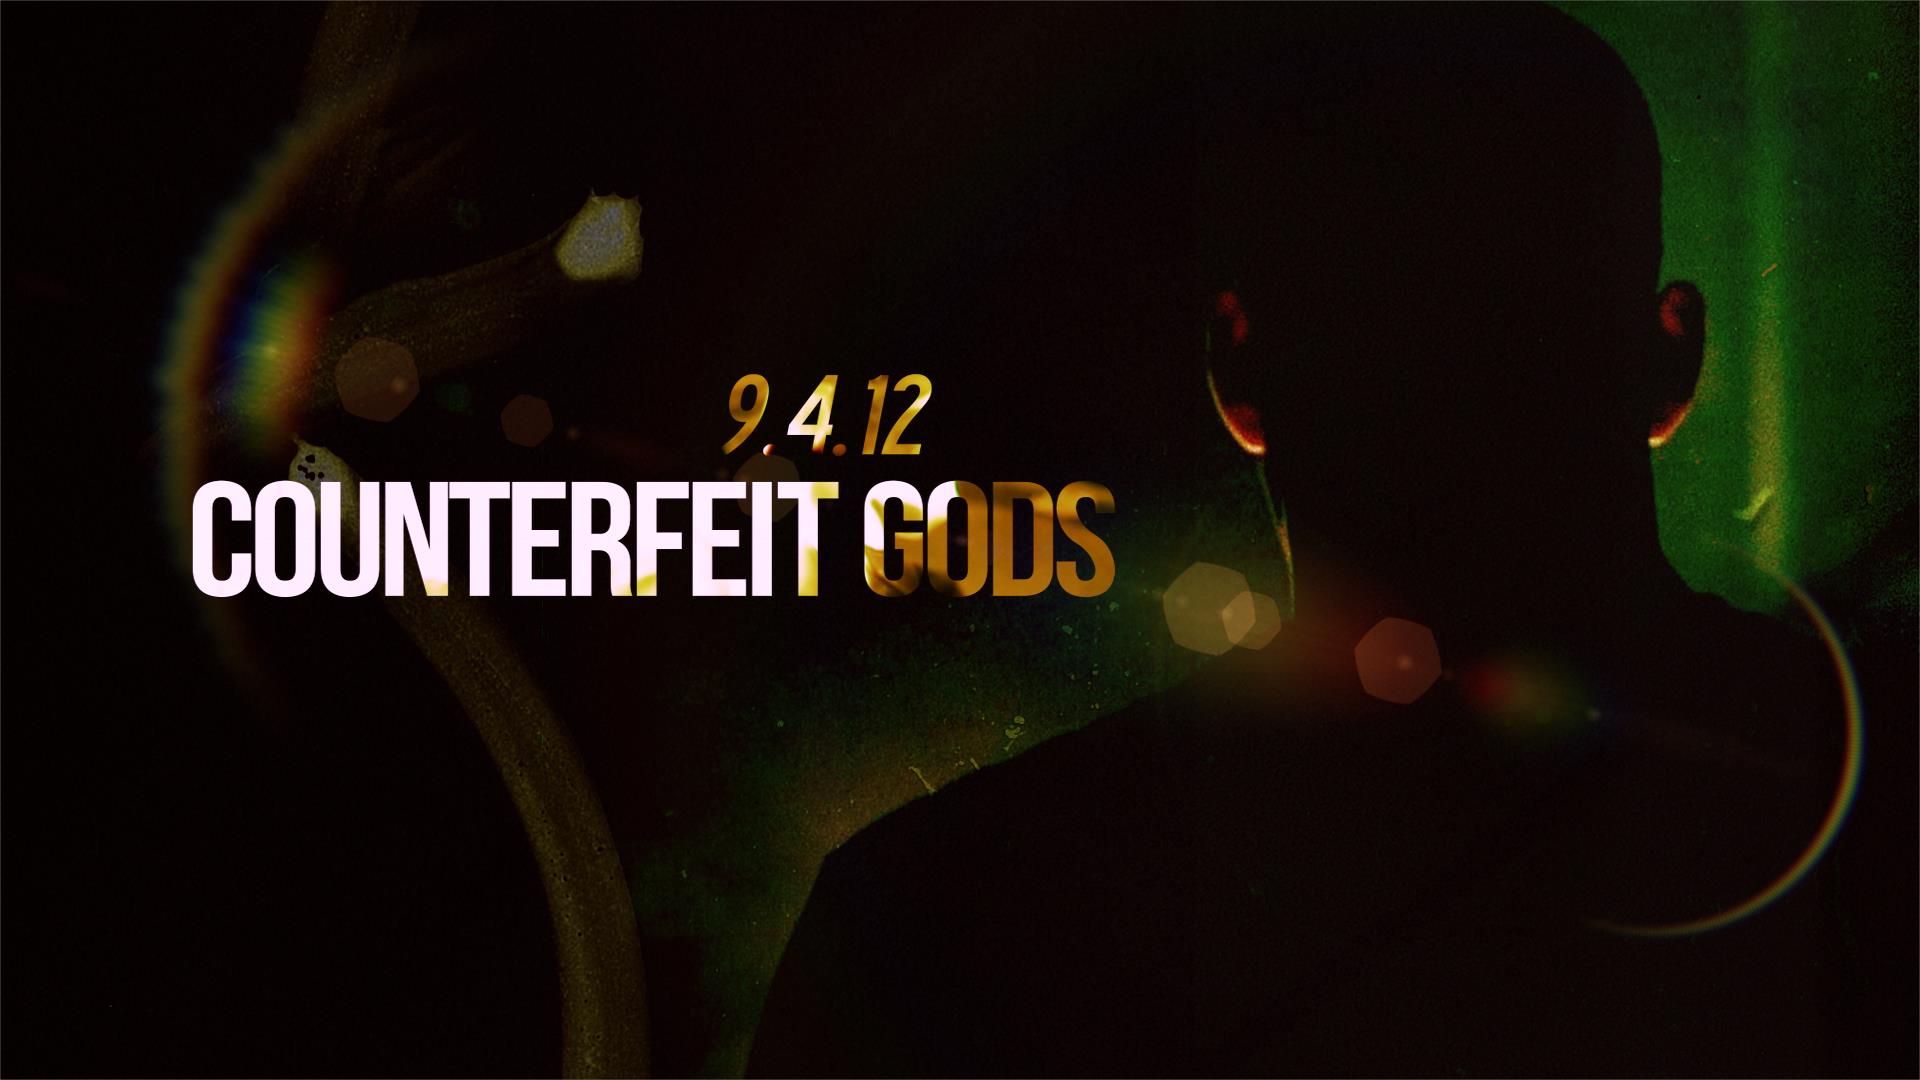 Counterfeit Gods [Video]